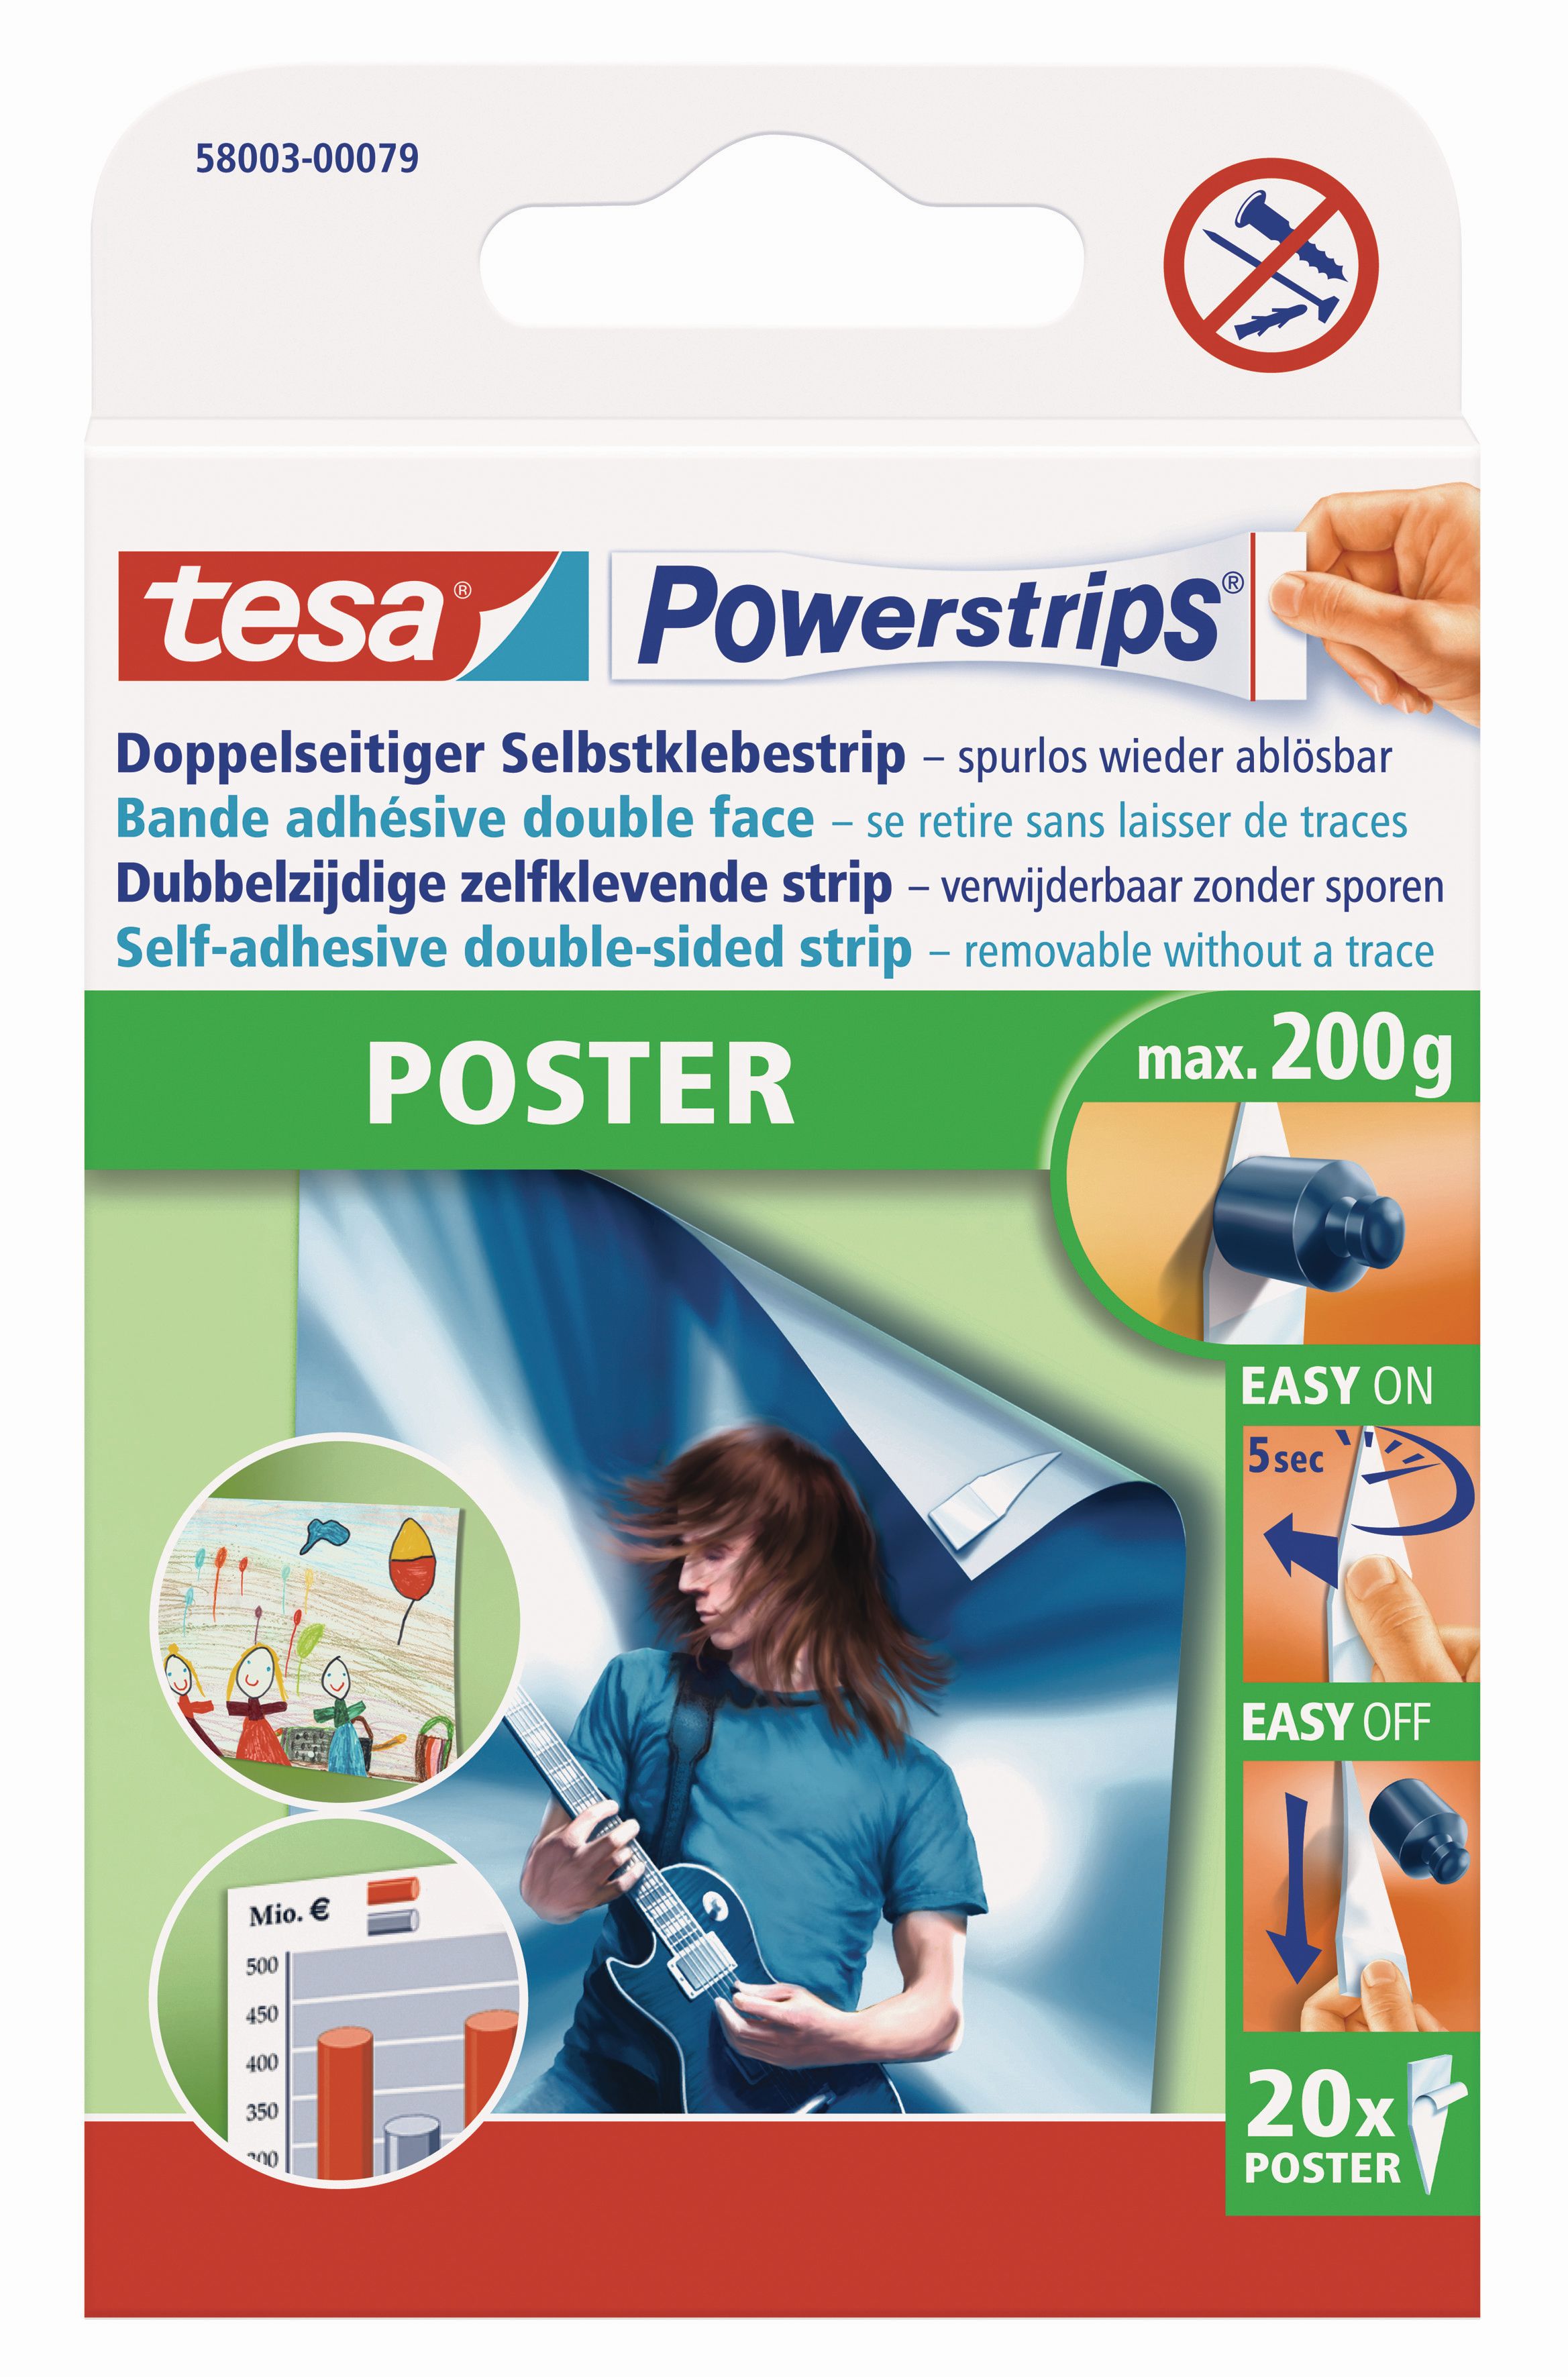 tesa Powerstrips® Poster - doppelseitig klebend